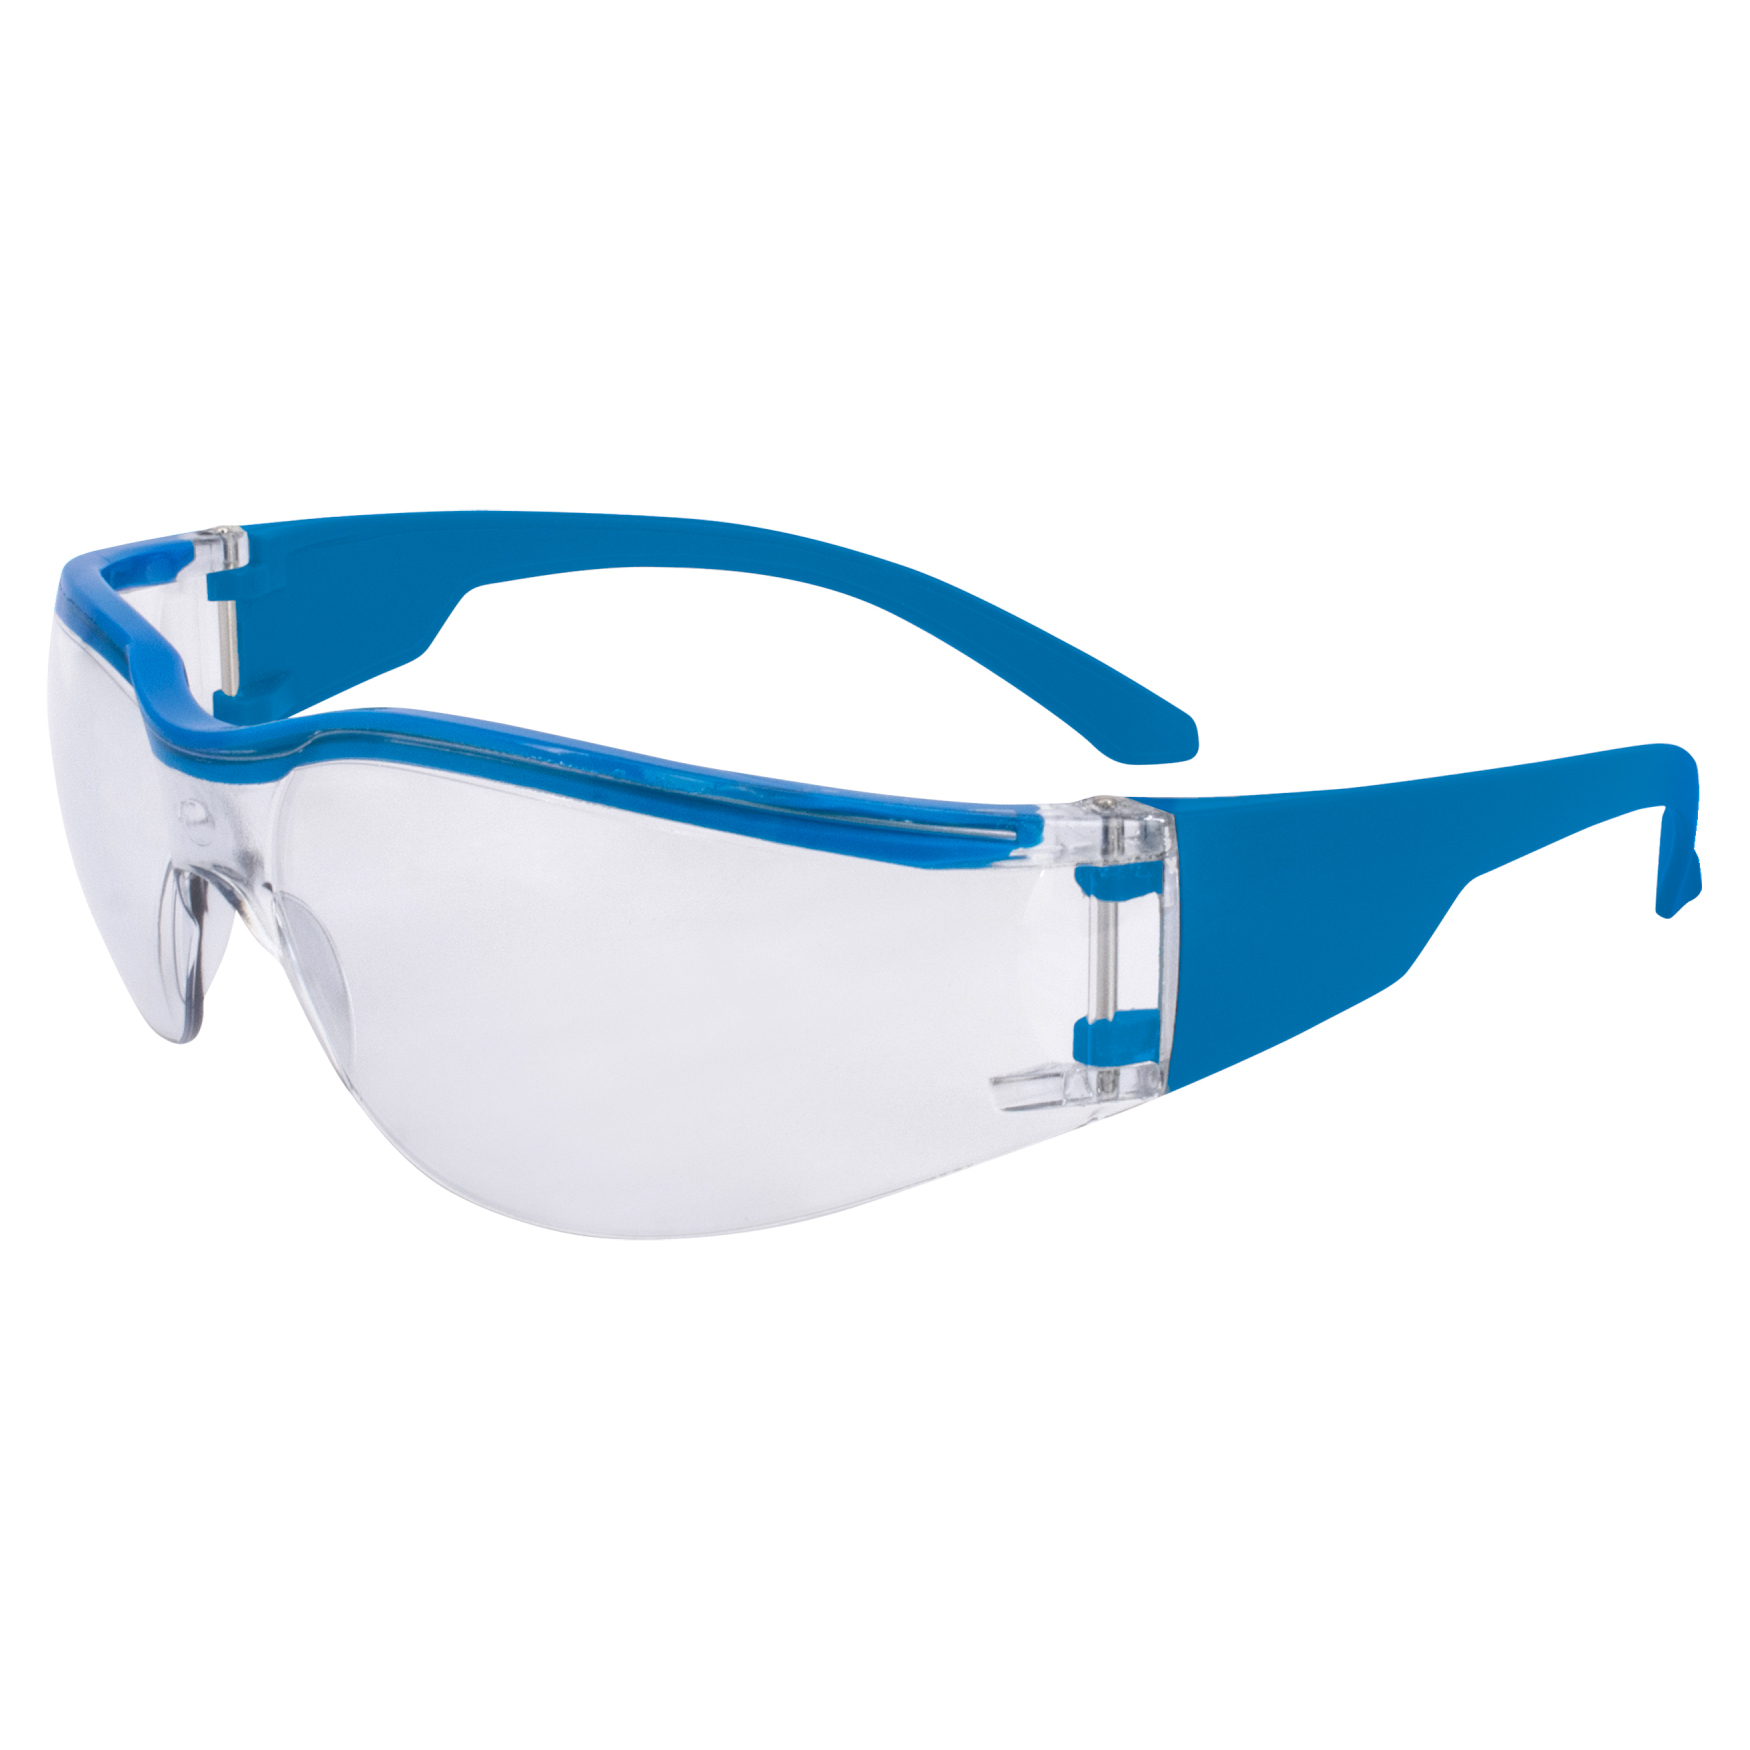 Radians Crossfire AR3 Premium Safety Eyewear - Western Safety